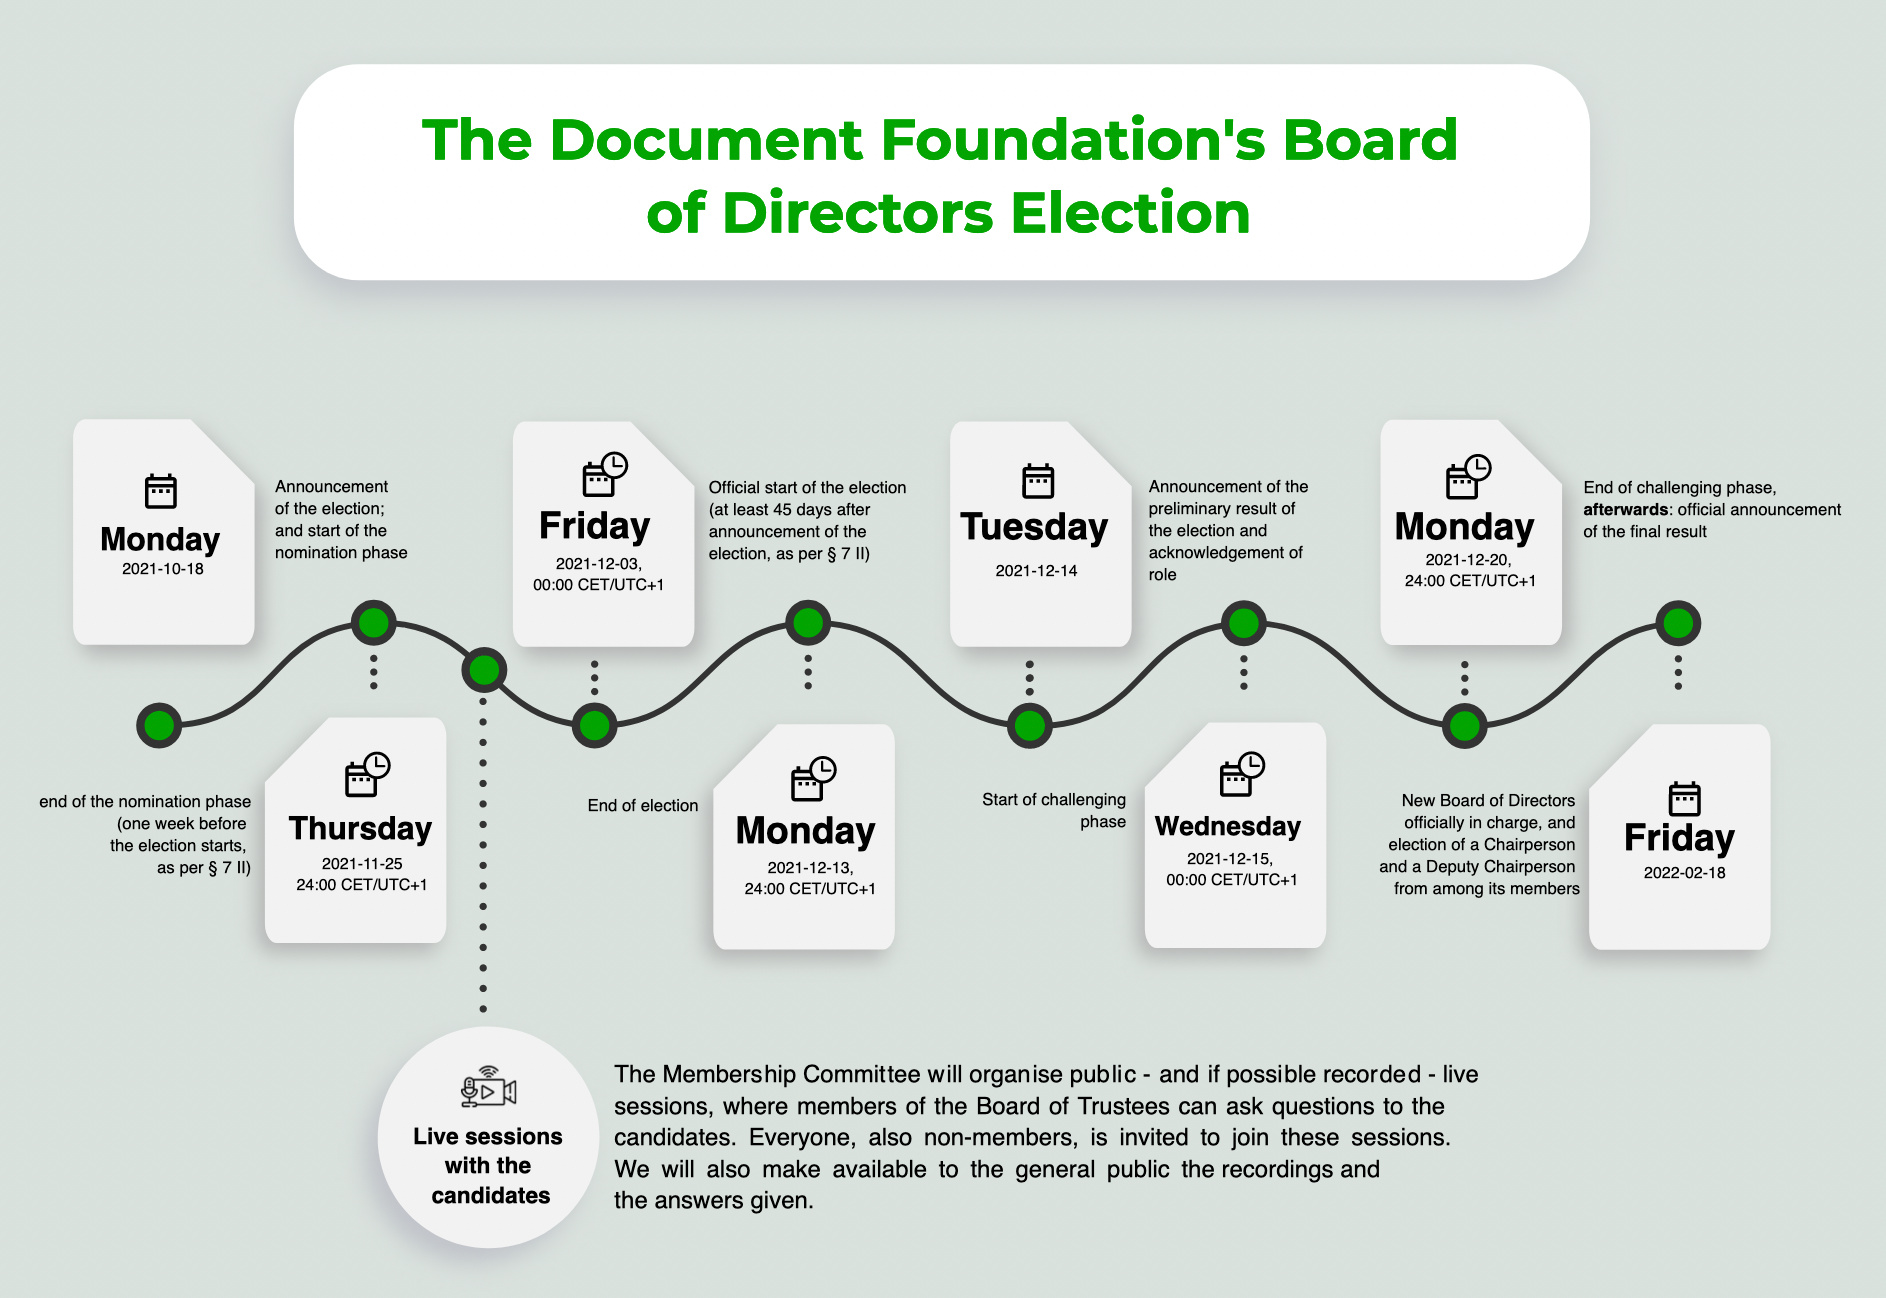 https://blog.documentfoundation.org/wp-content/uploads/2021/11/BoD_election_infographic.jpg